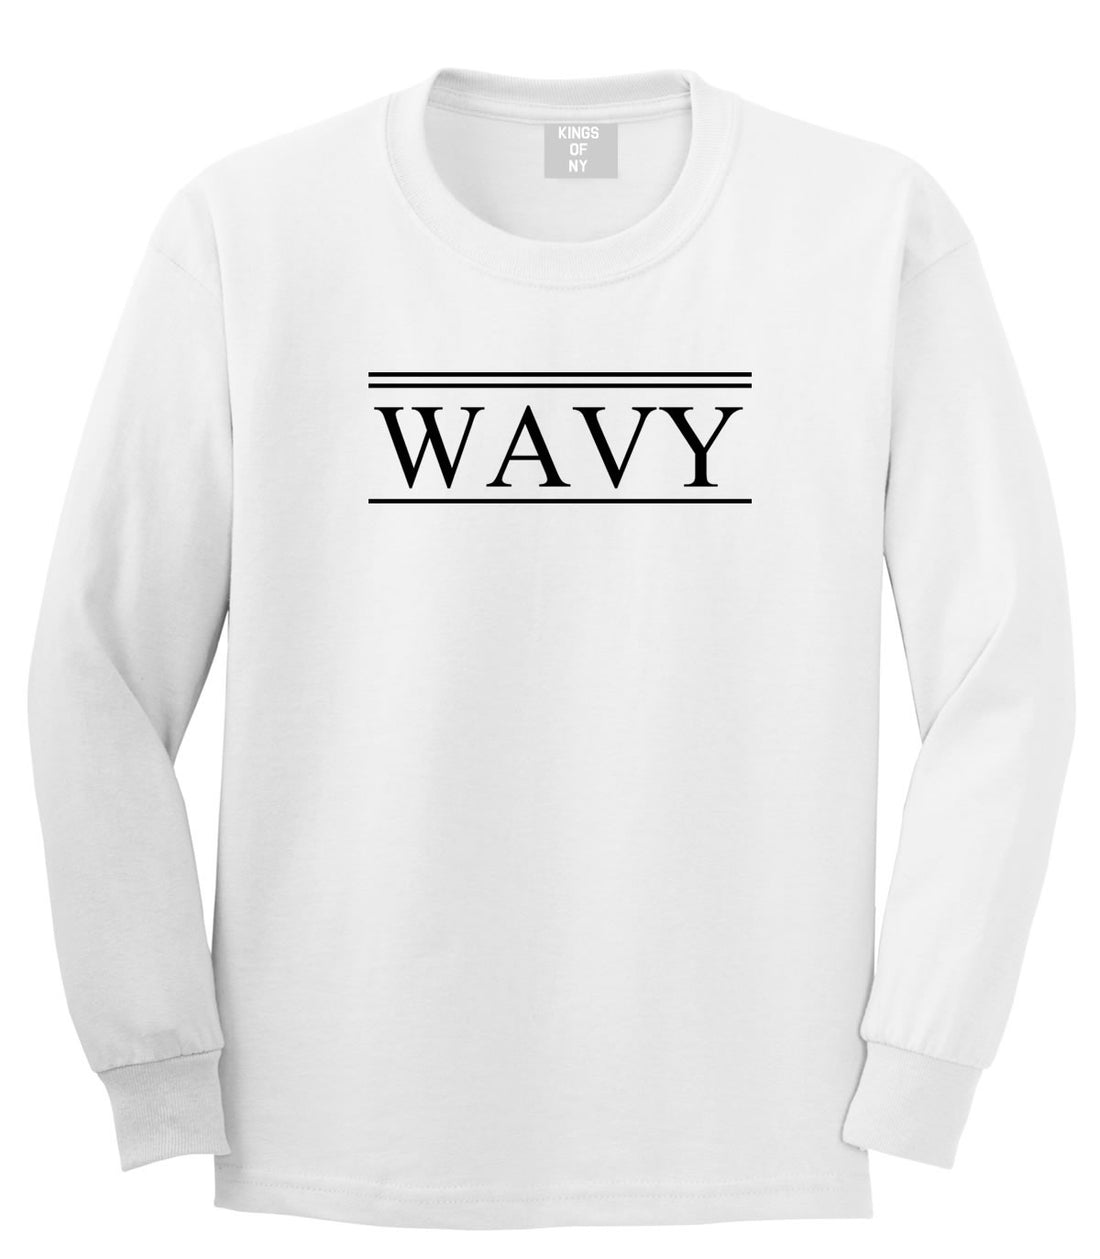 Wavy Harlem Long Sleeve T-Shirt in White By Kings Of NY